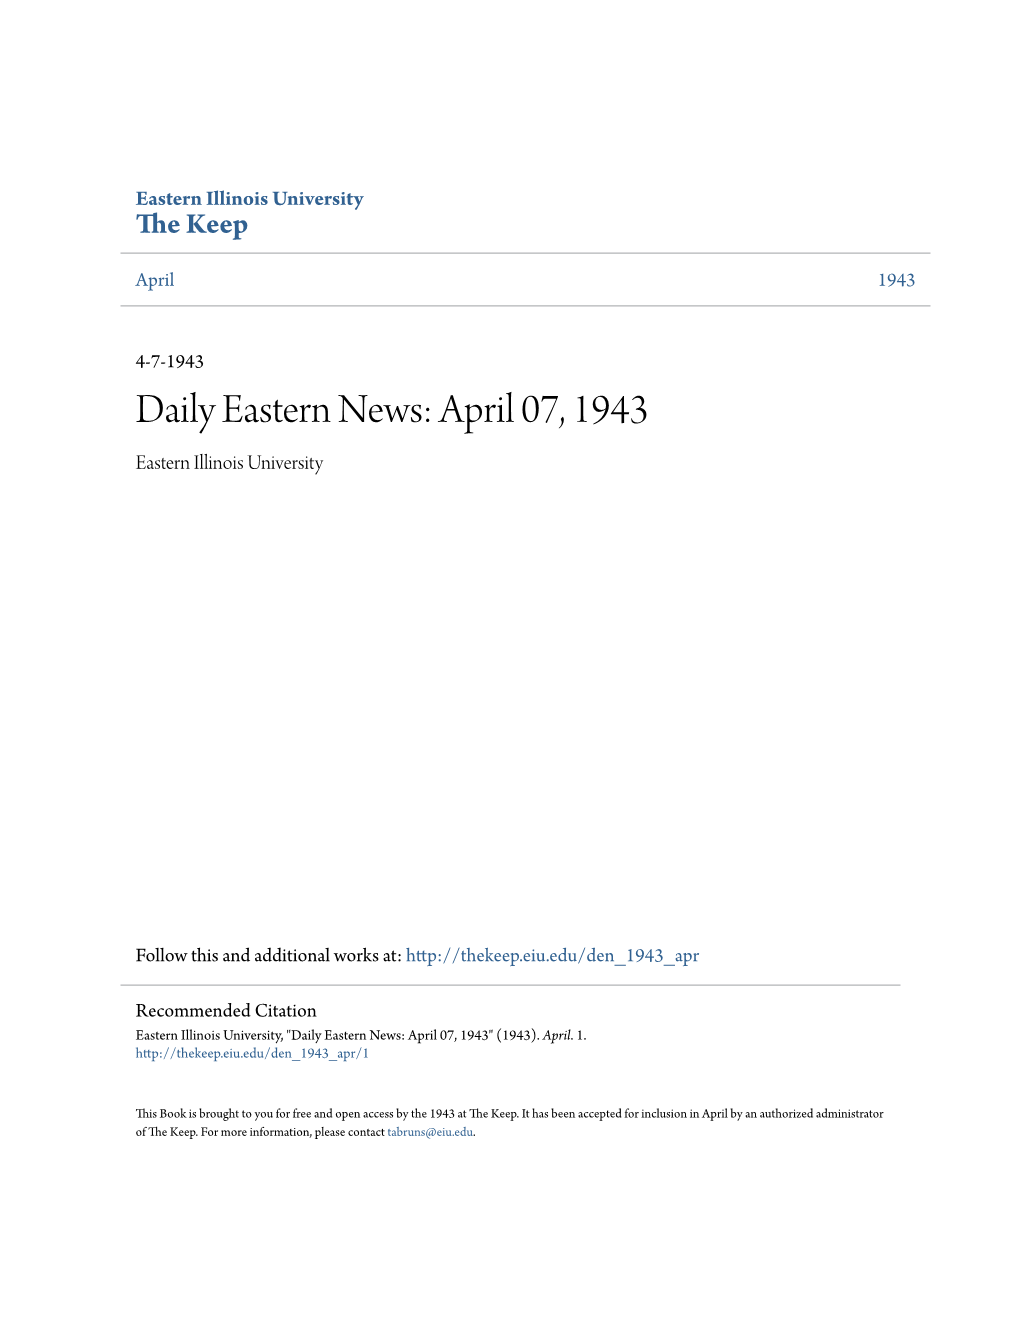 Daily Eastern News: April 07, 1943 Eastern Illinois University